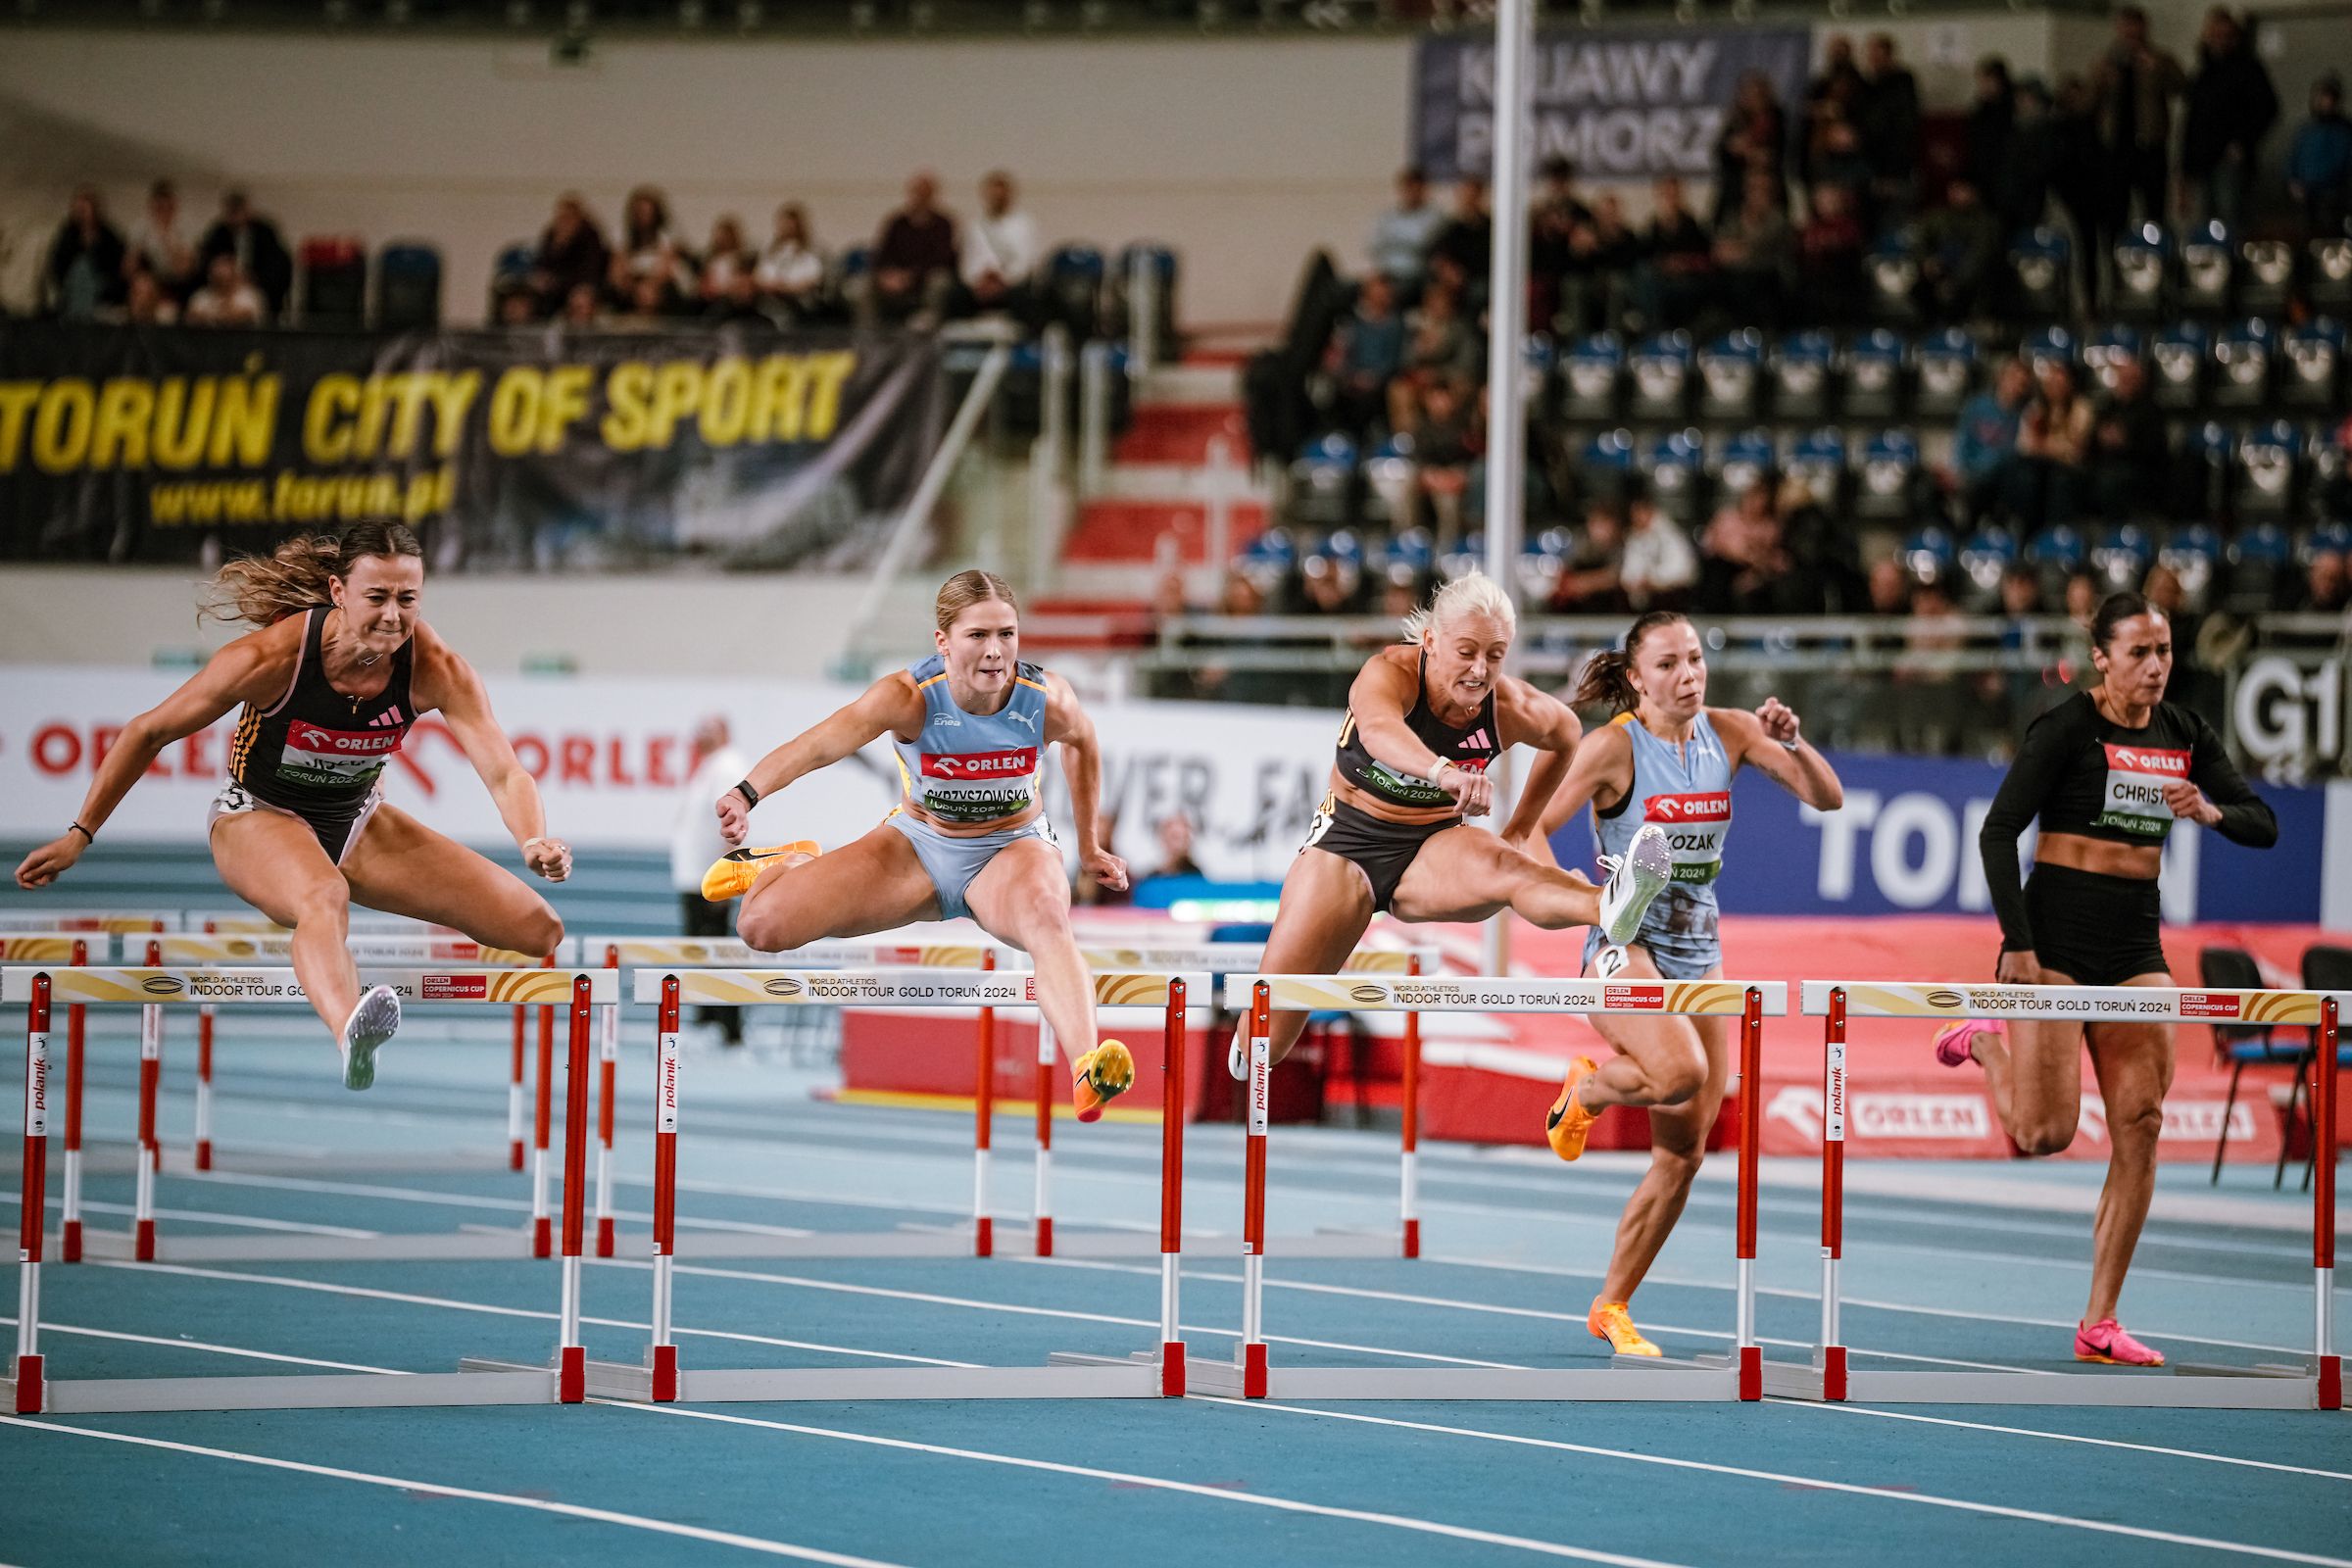 The women's 60m hurdles in Torun